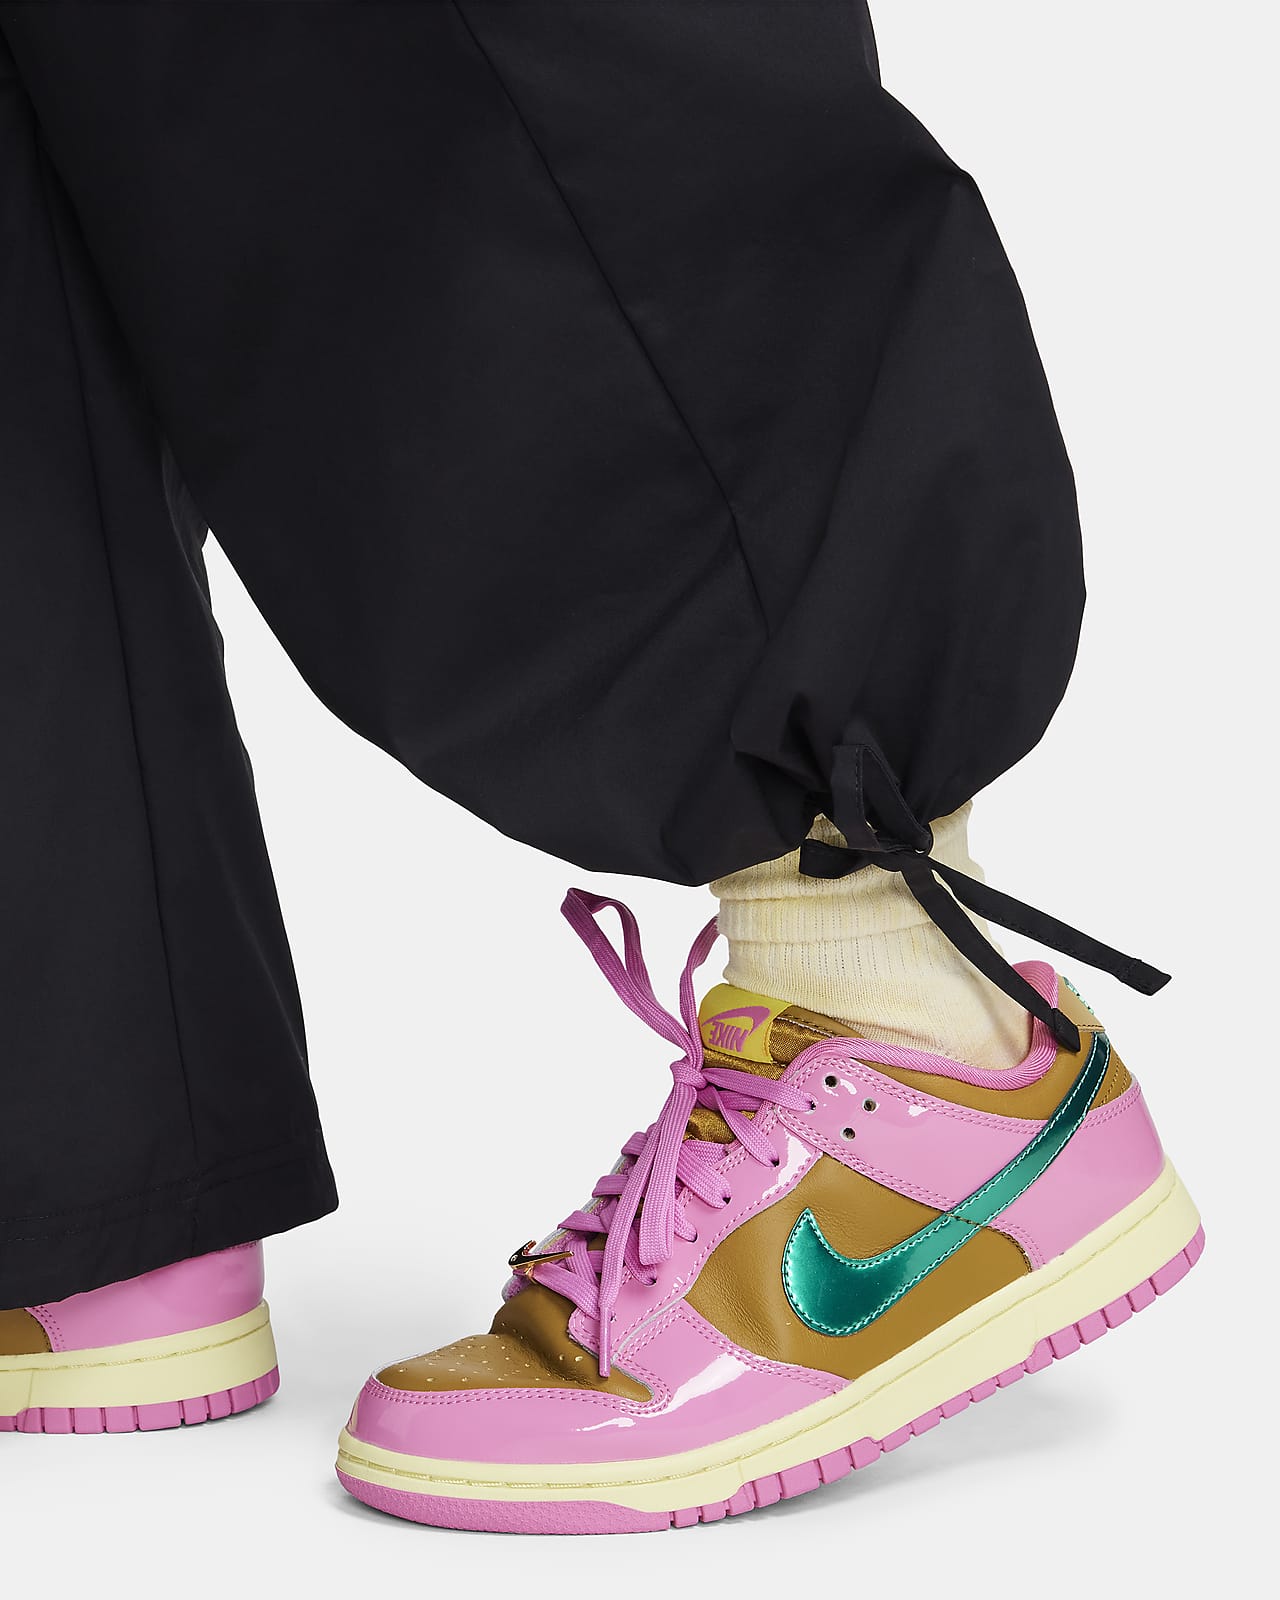 Nike Sportswear Oversized High-waisted Woven Cargo Pants in